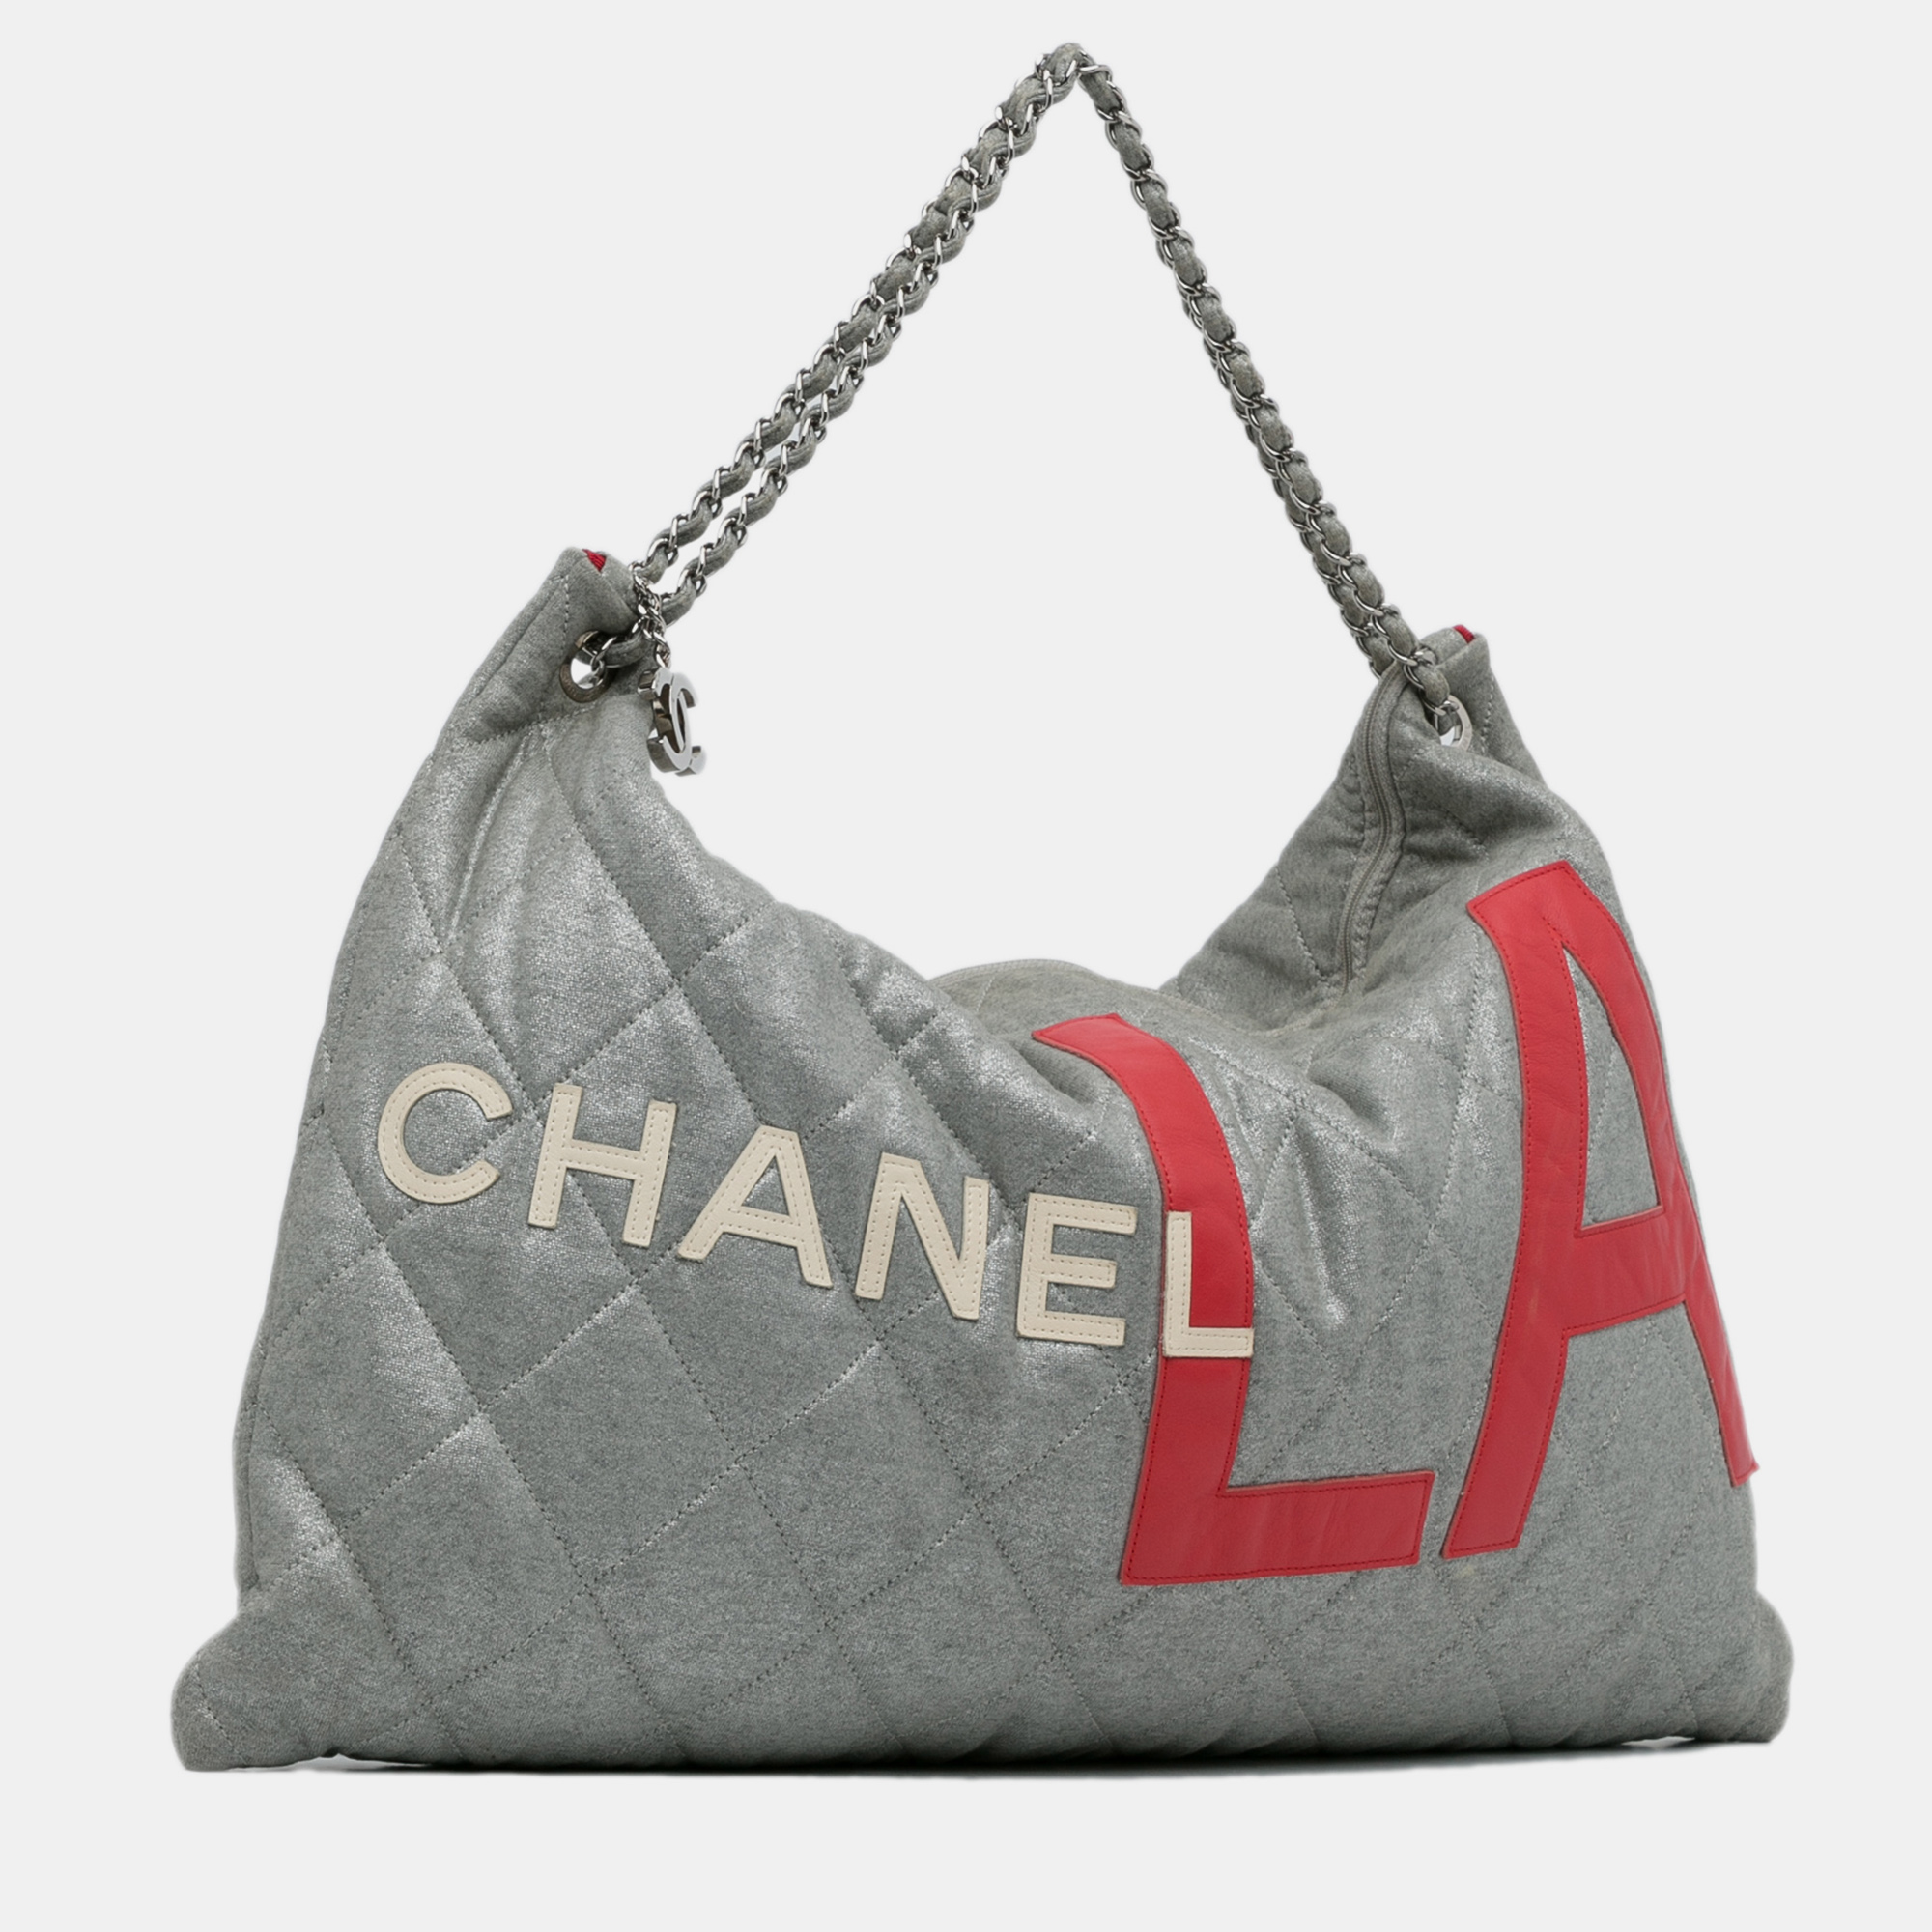 Chanel Cruise Line LA Travel Bag